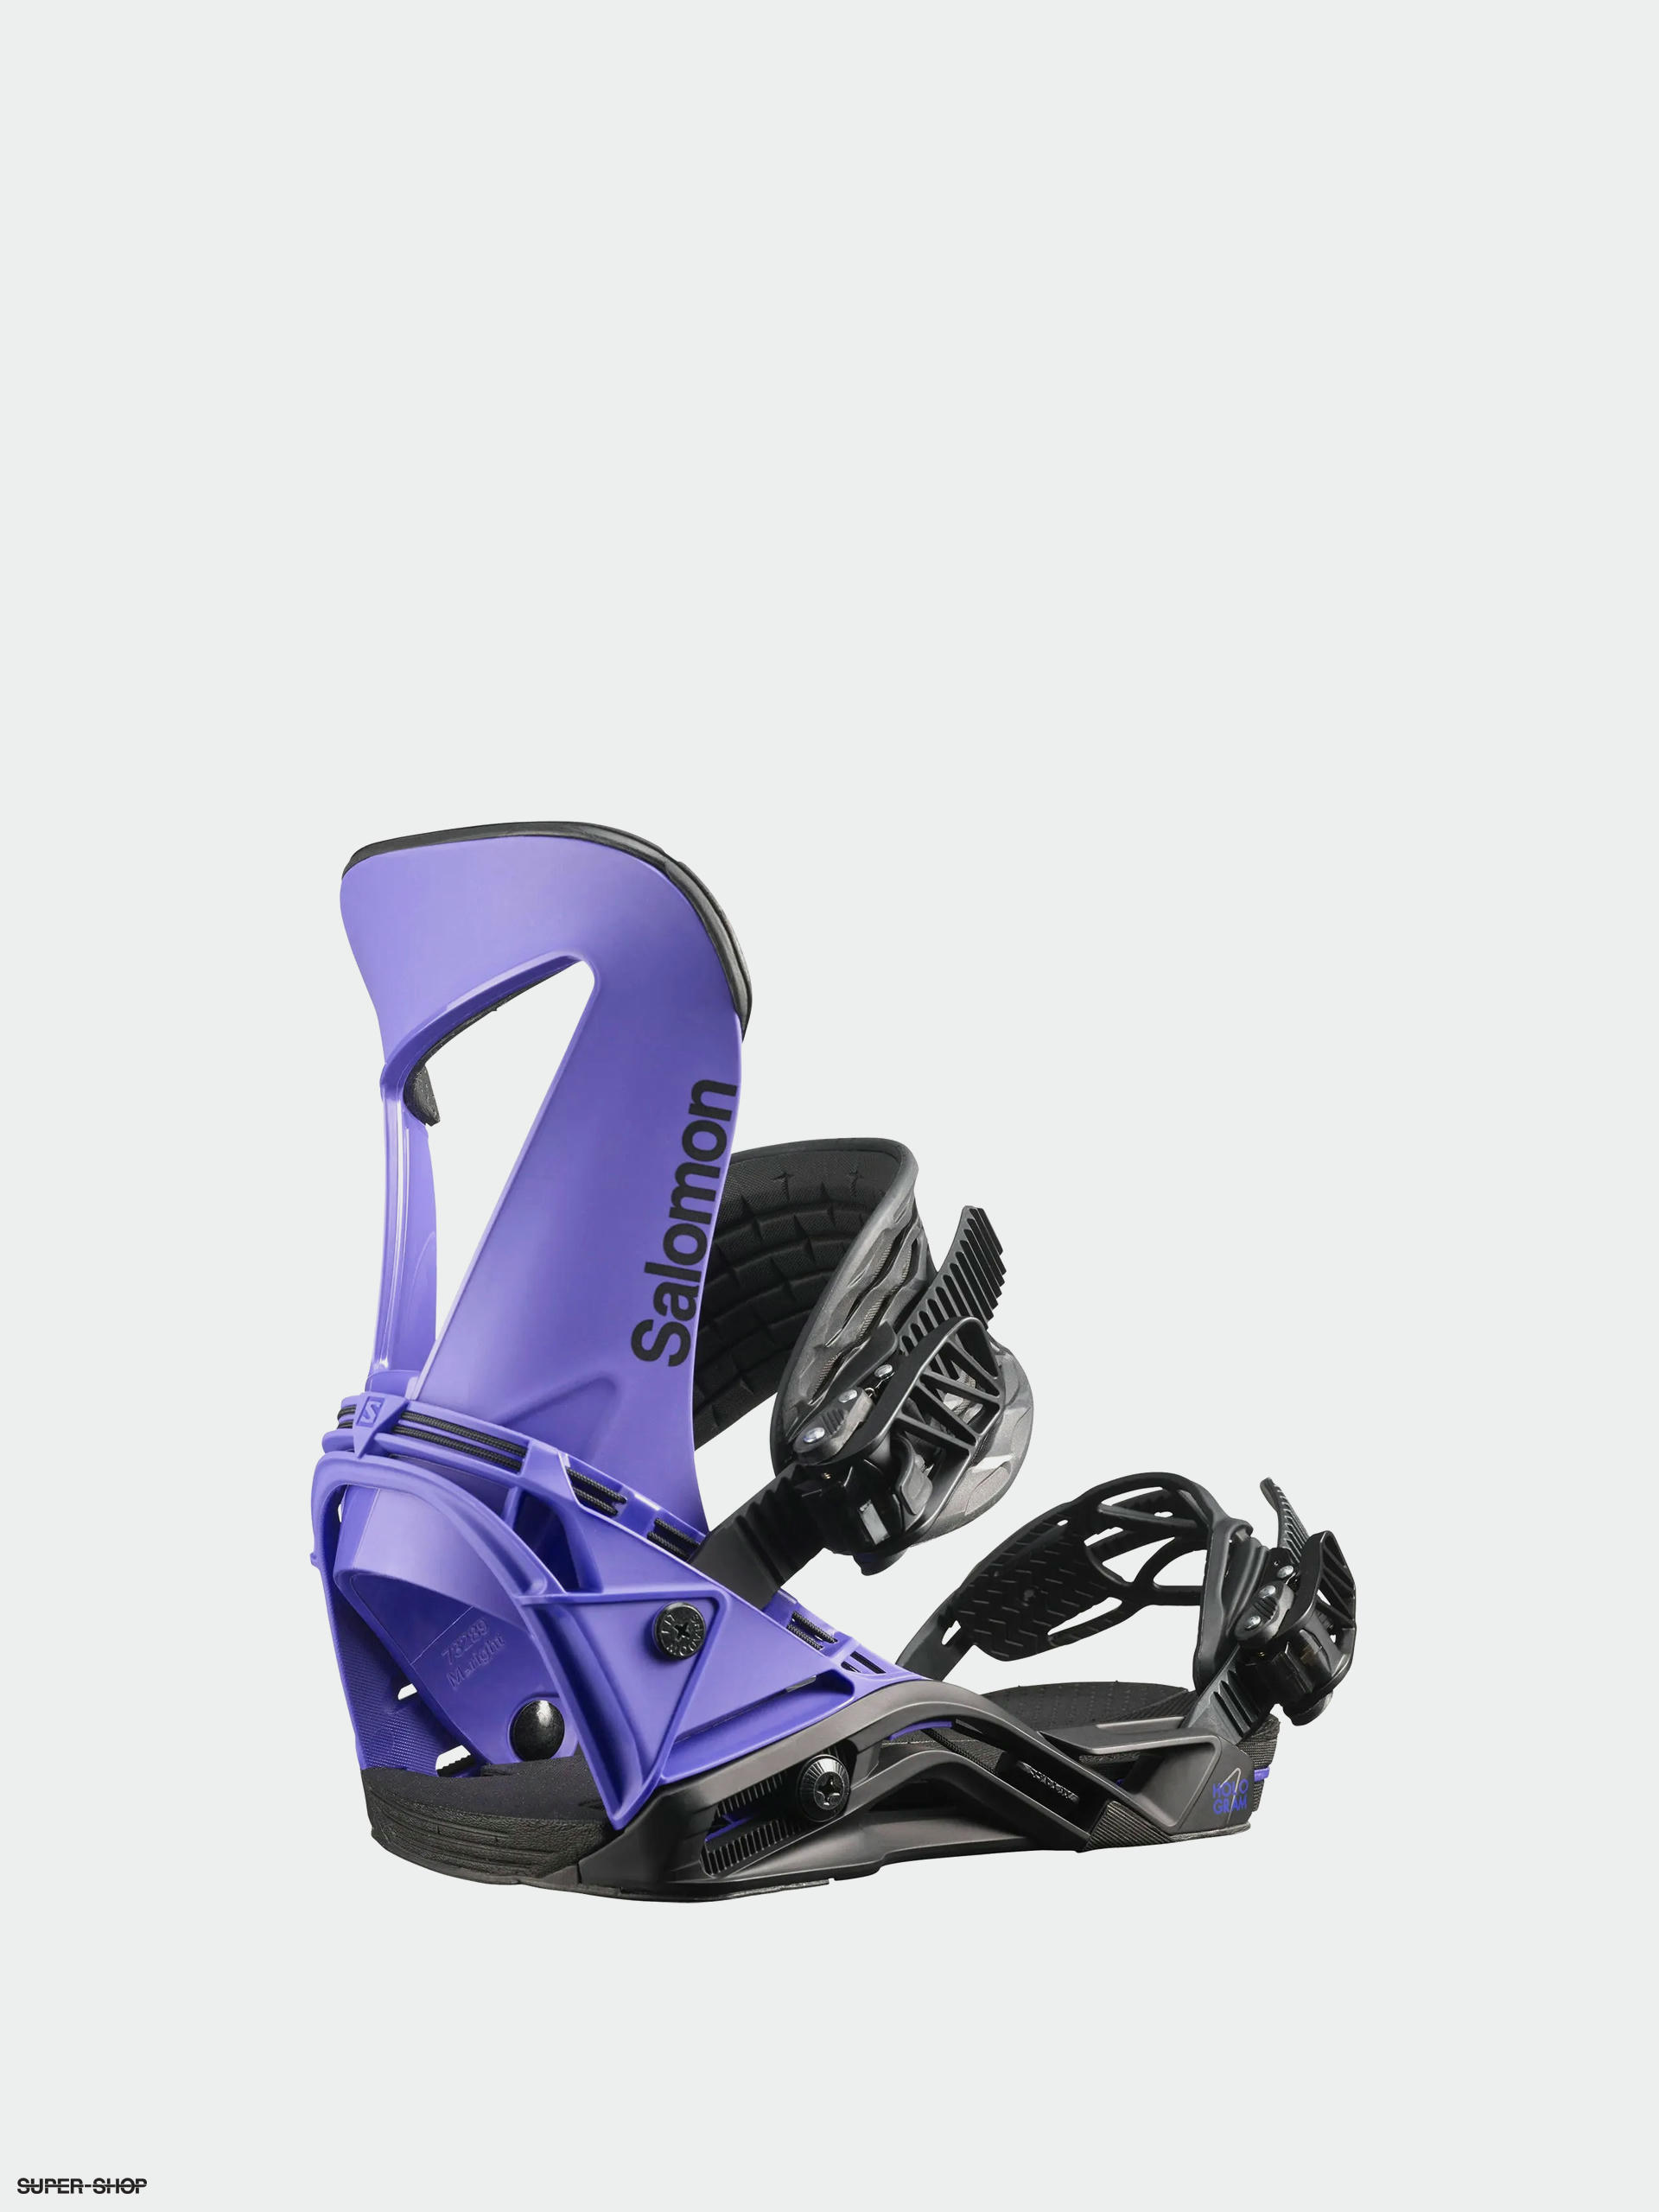 Mens Salomon Hologram Snowboard bindings (purple)